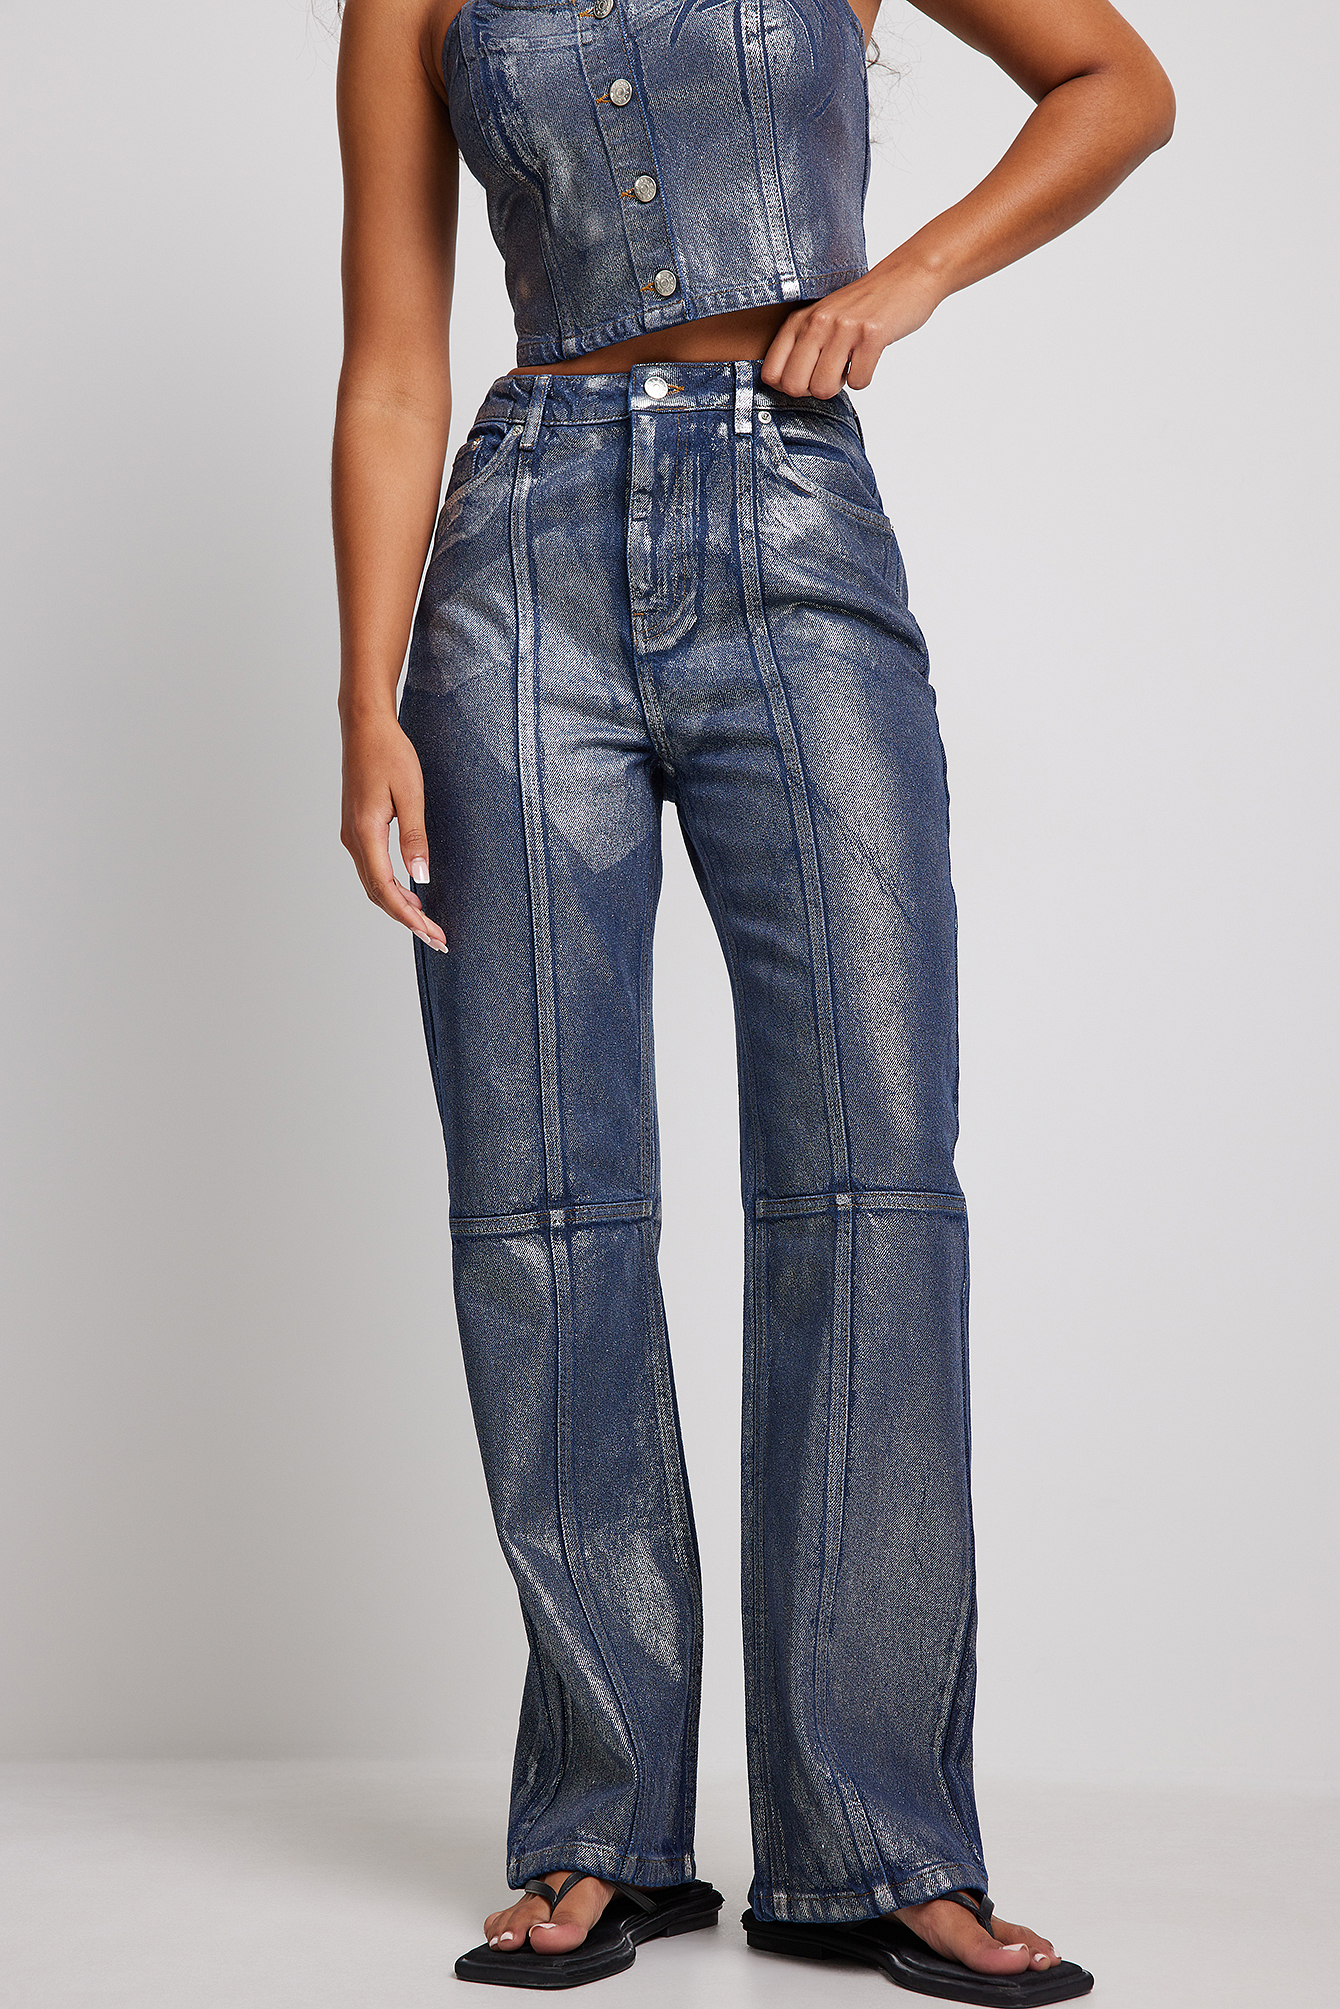 NYDJ Coated Denim Uplift Marilyn Straight Jeans Overcast Plus Size 20W  A552490 | eBay